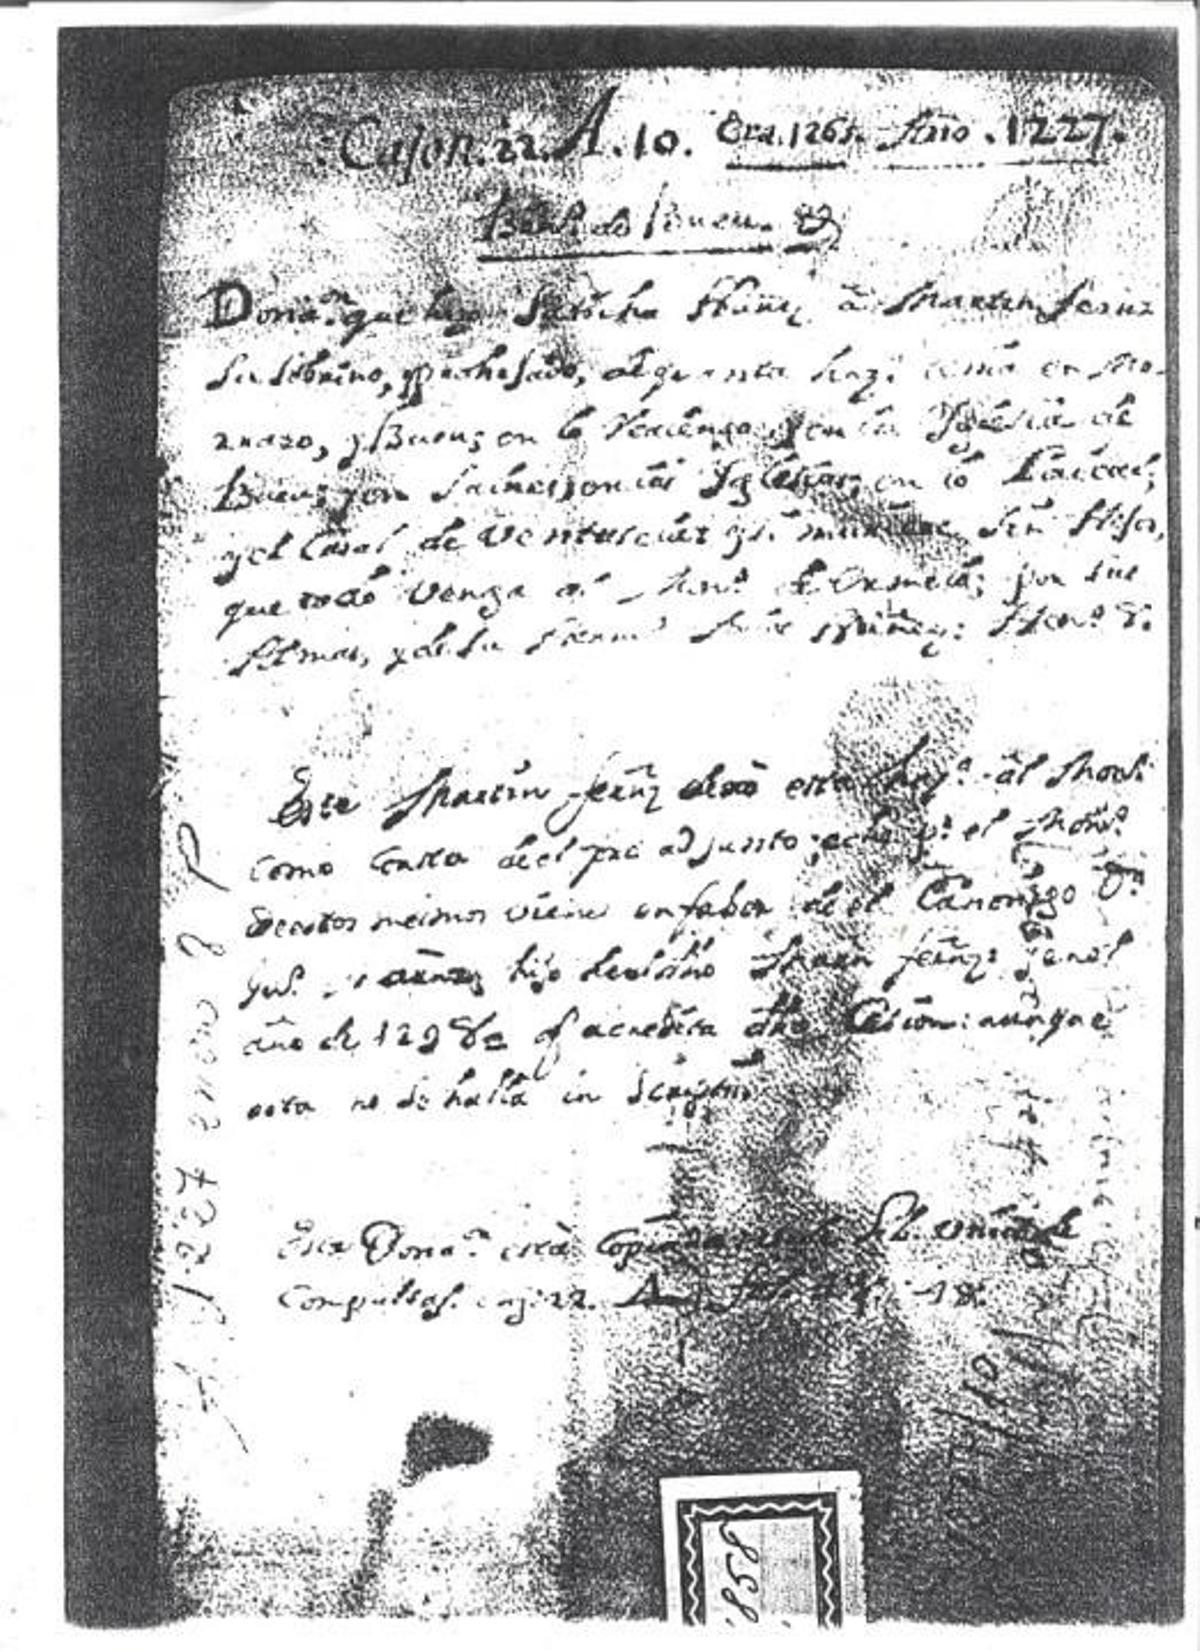 Una copia del documento de 1227 en el que aparece citada la parroquia de Bueu.